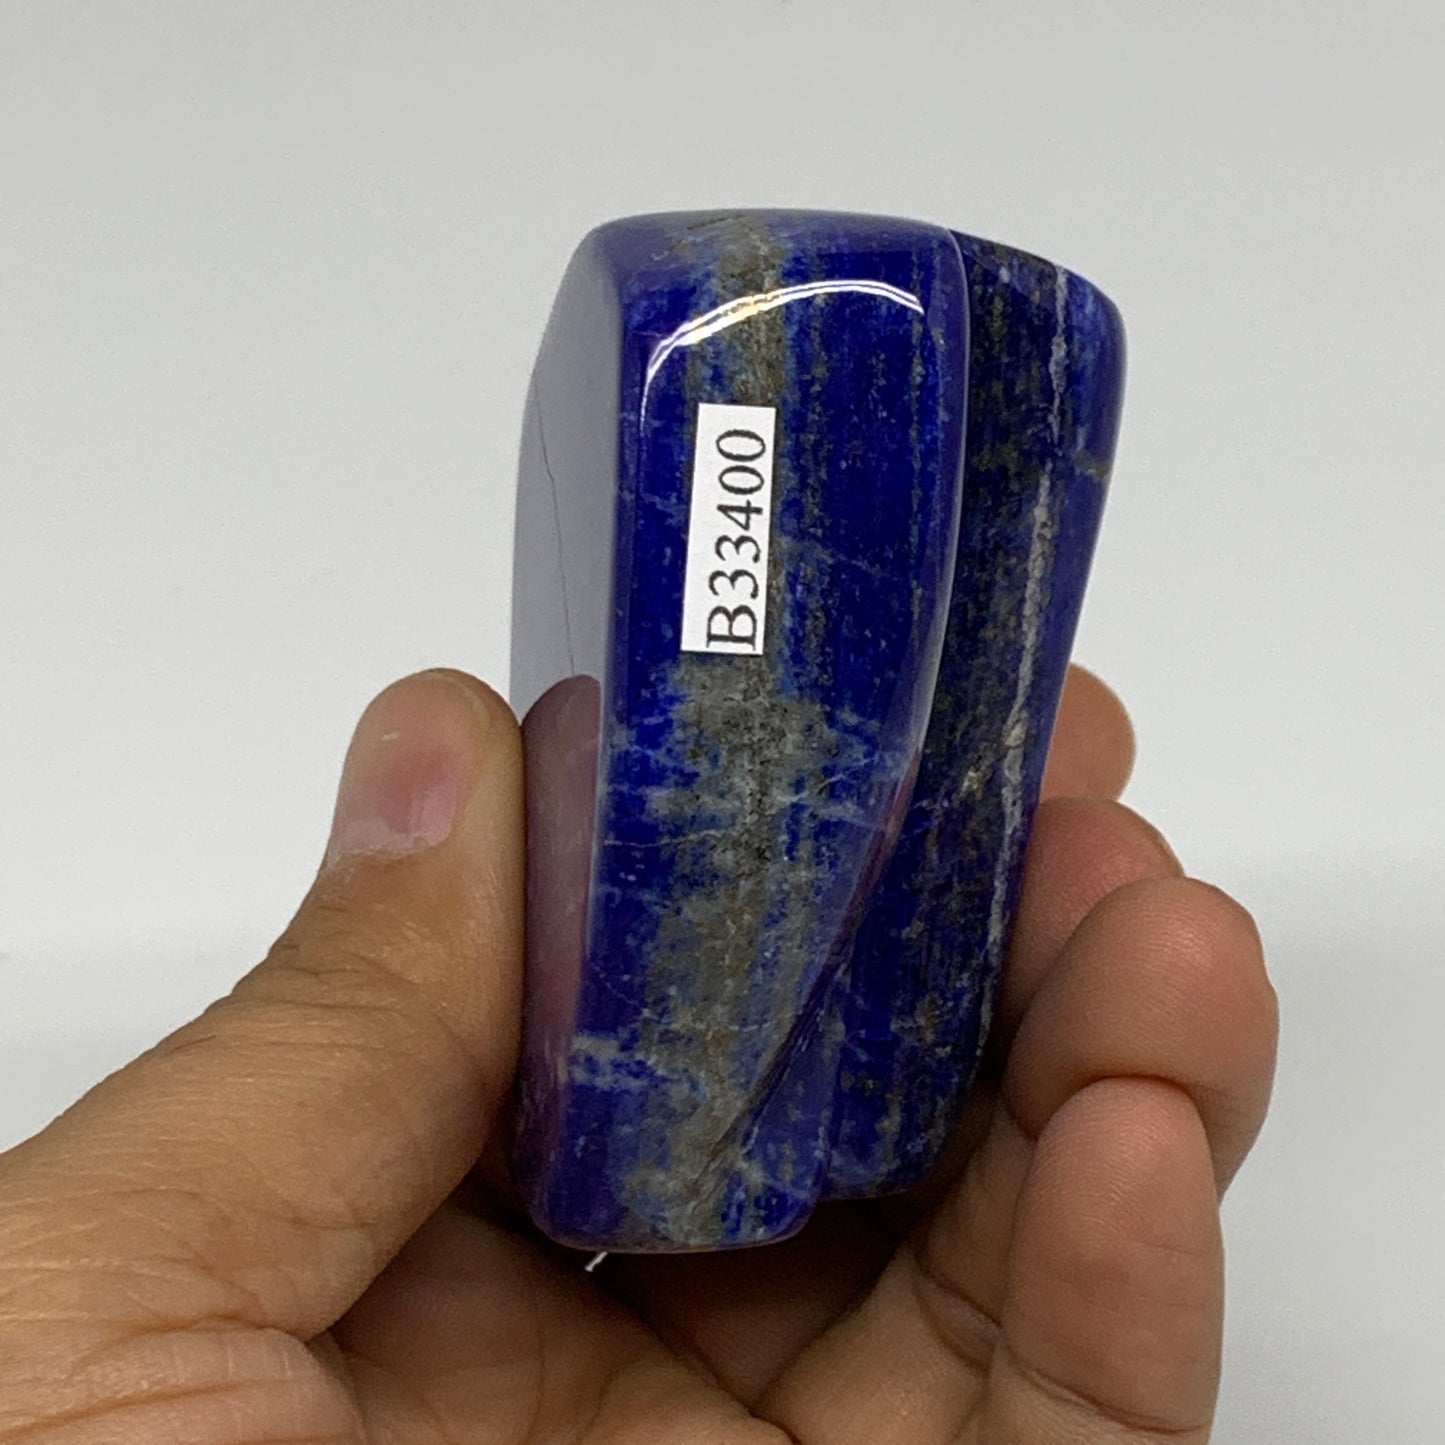 0.57 lbs, 2.5"x2.3"x1.5", Natural Freeform Lapis Lazuli from Afghanistan, B33400